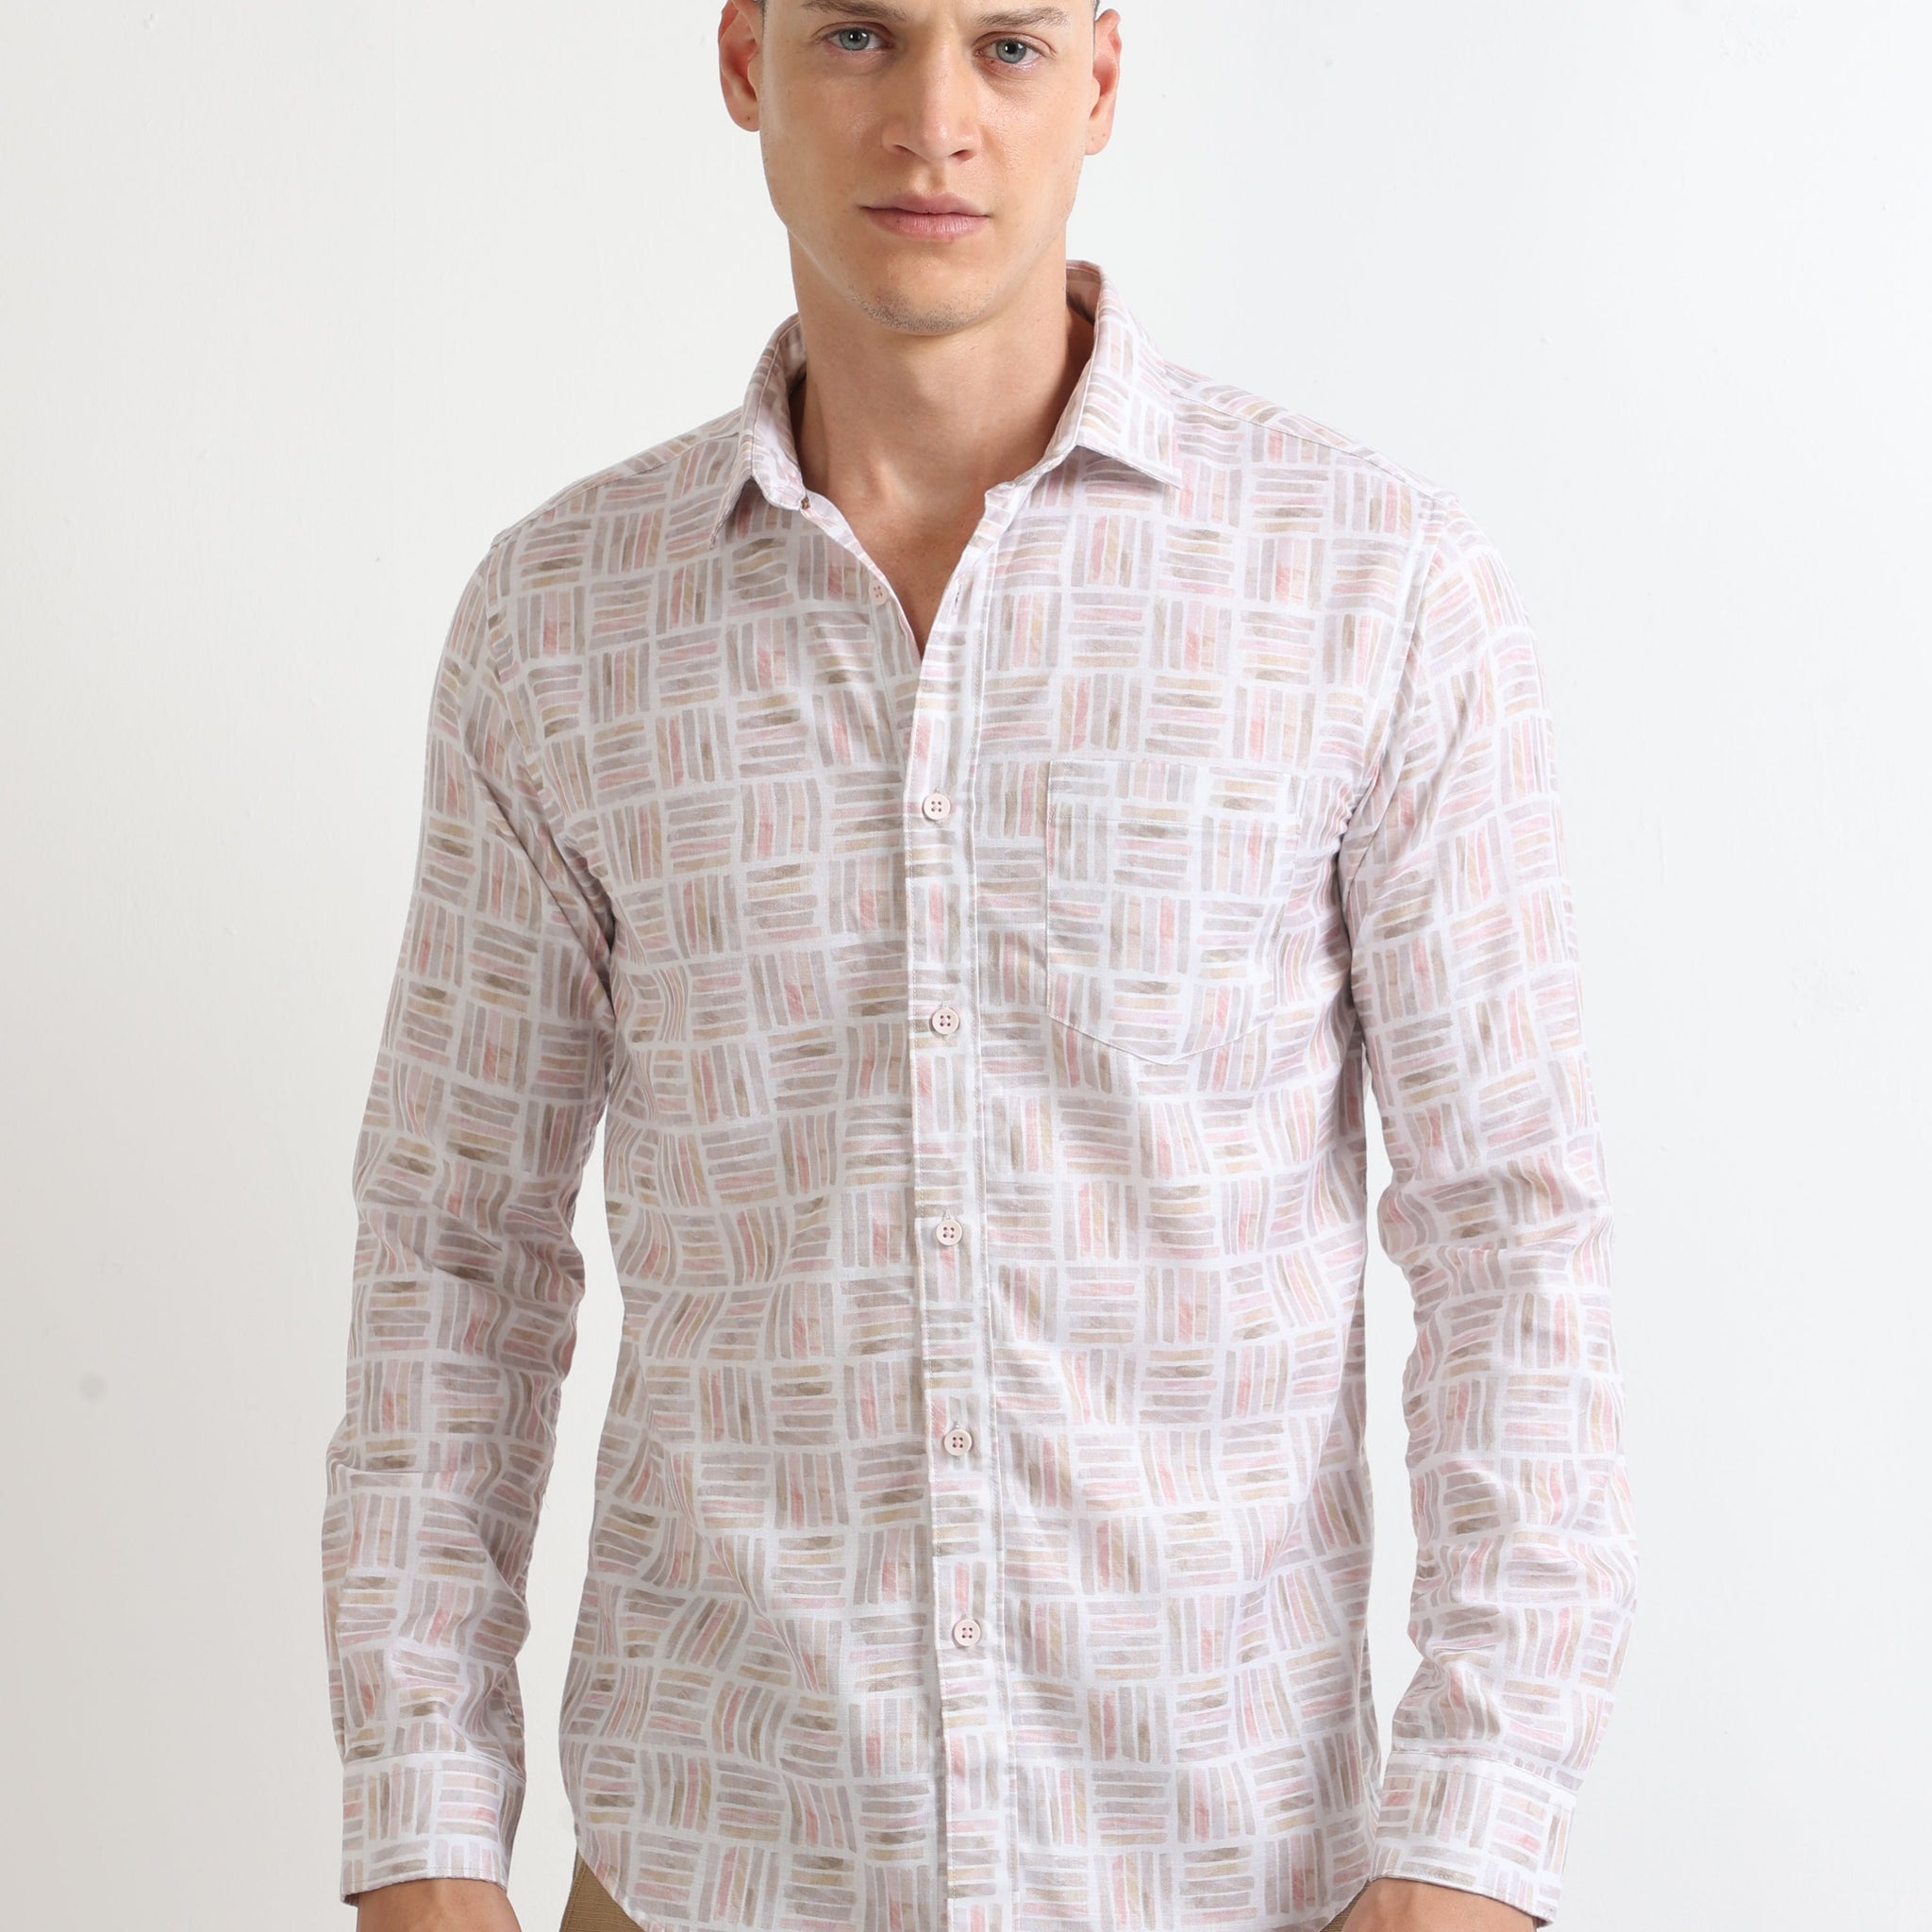 cream abstract men's digital printed shirt